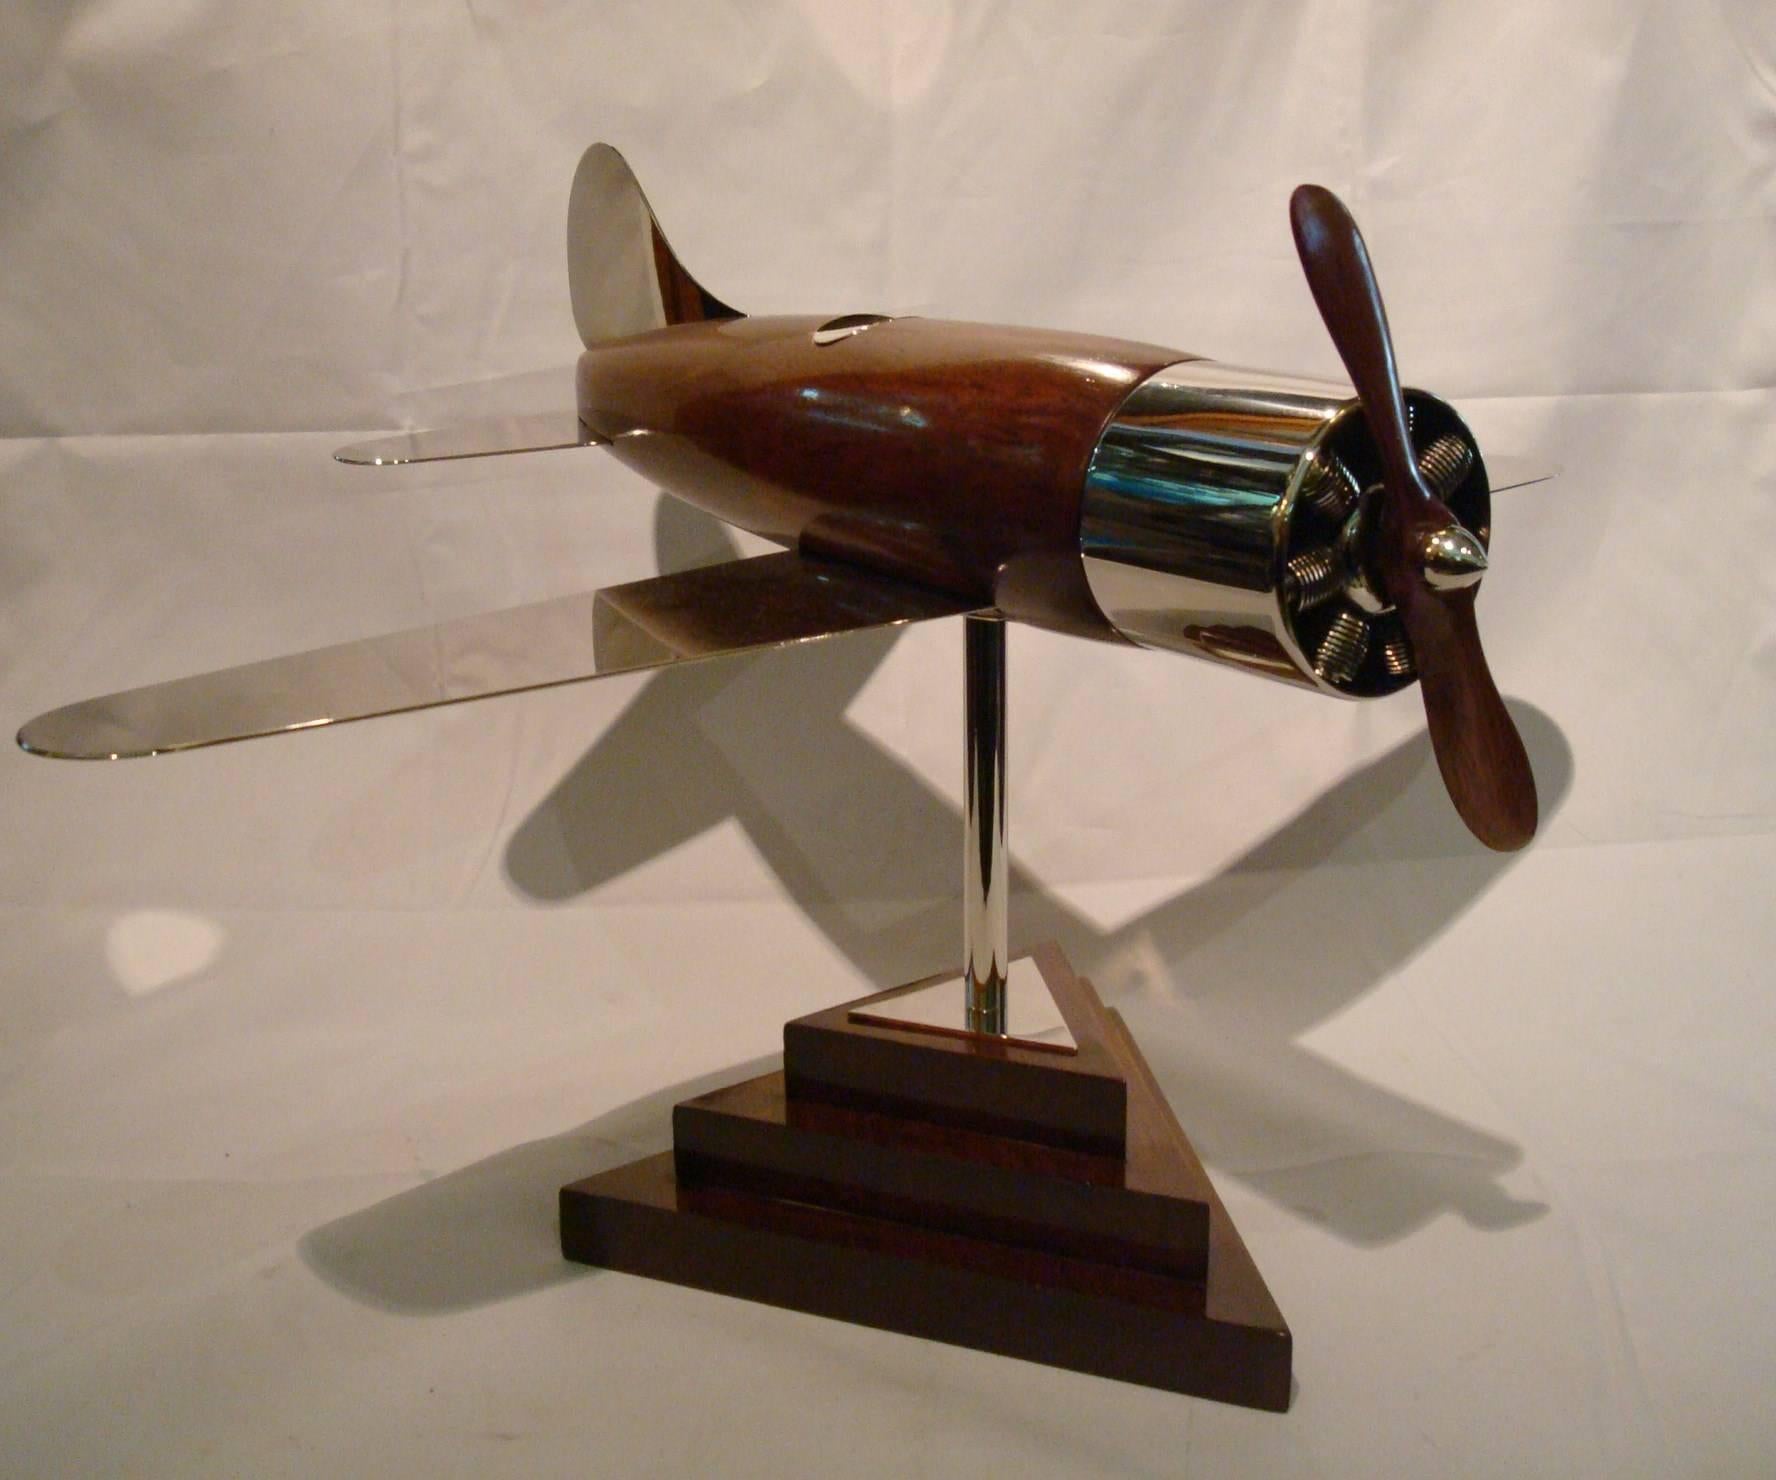 Silvered 20th Century, Art Deco Streamline Airplane Wooden Model Sculpture, 1930s